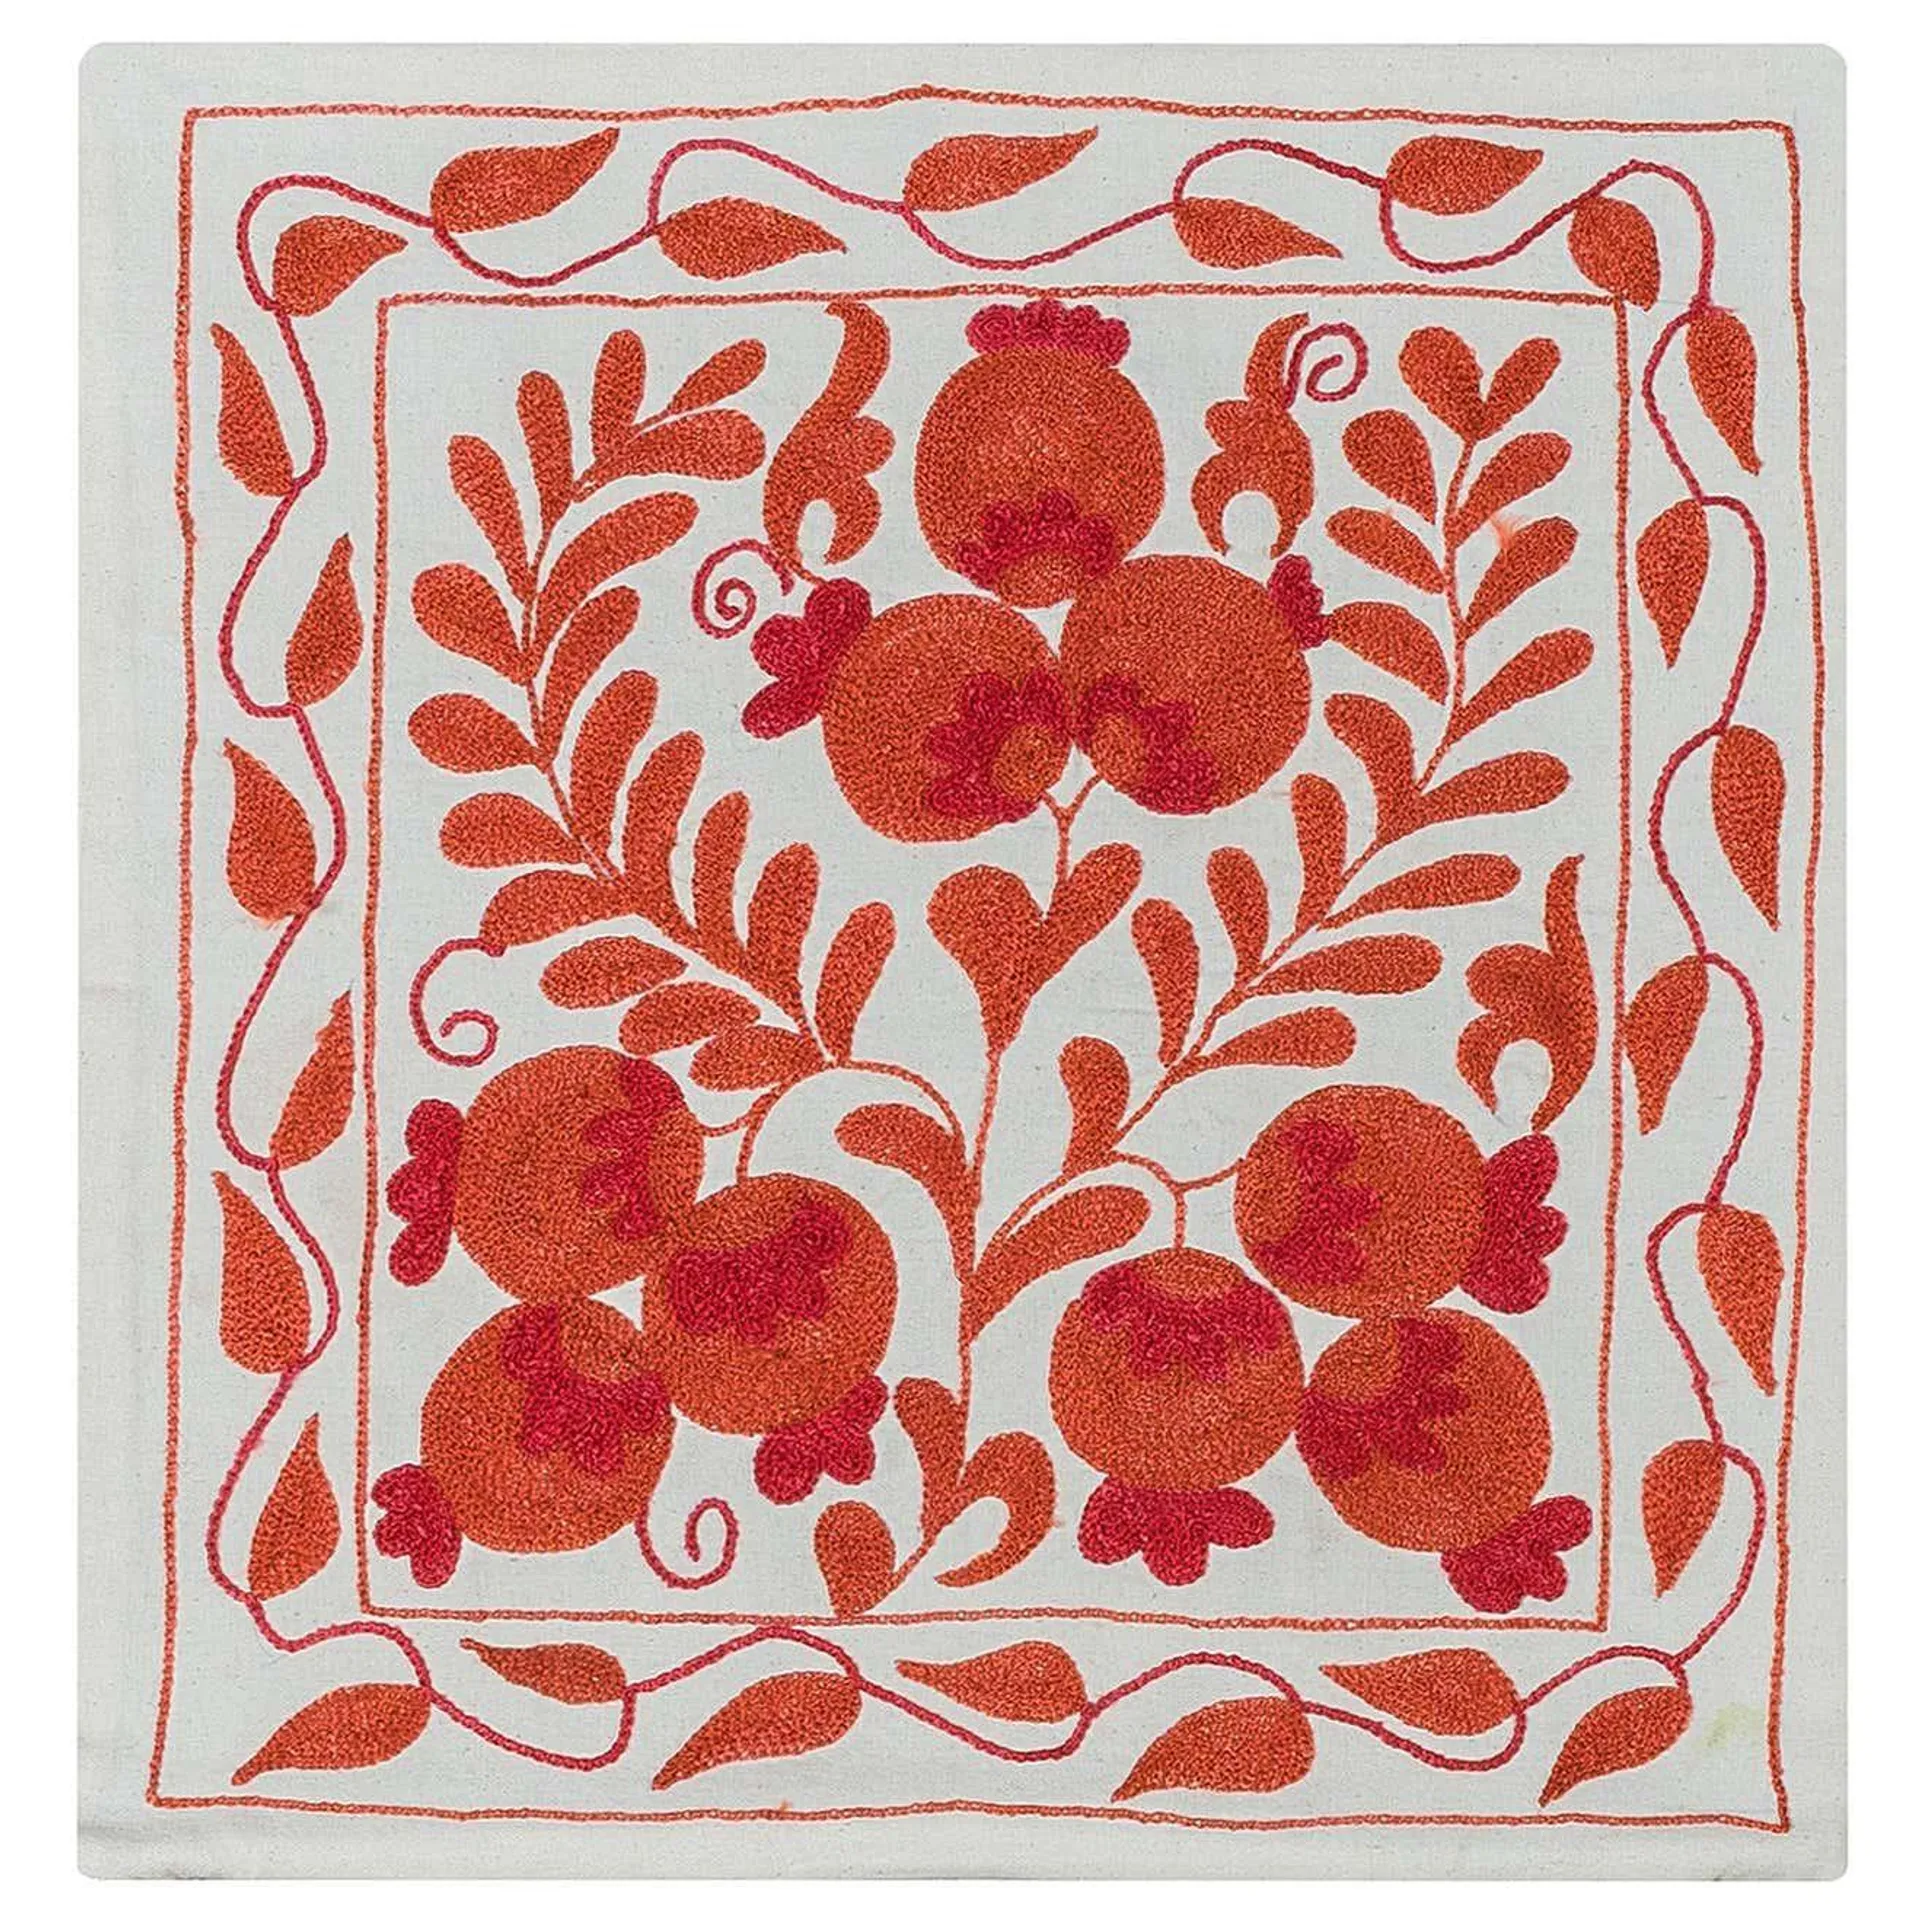 Pomegranate Tree Design Silk Embroidery Cushion Cover in Cream & Red